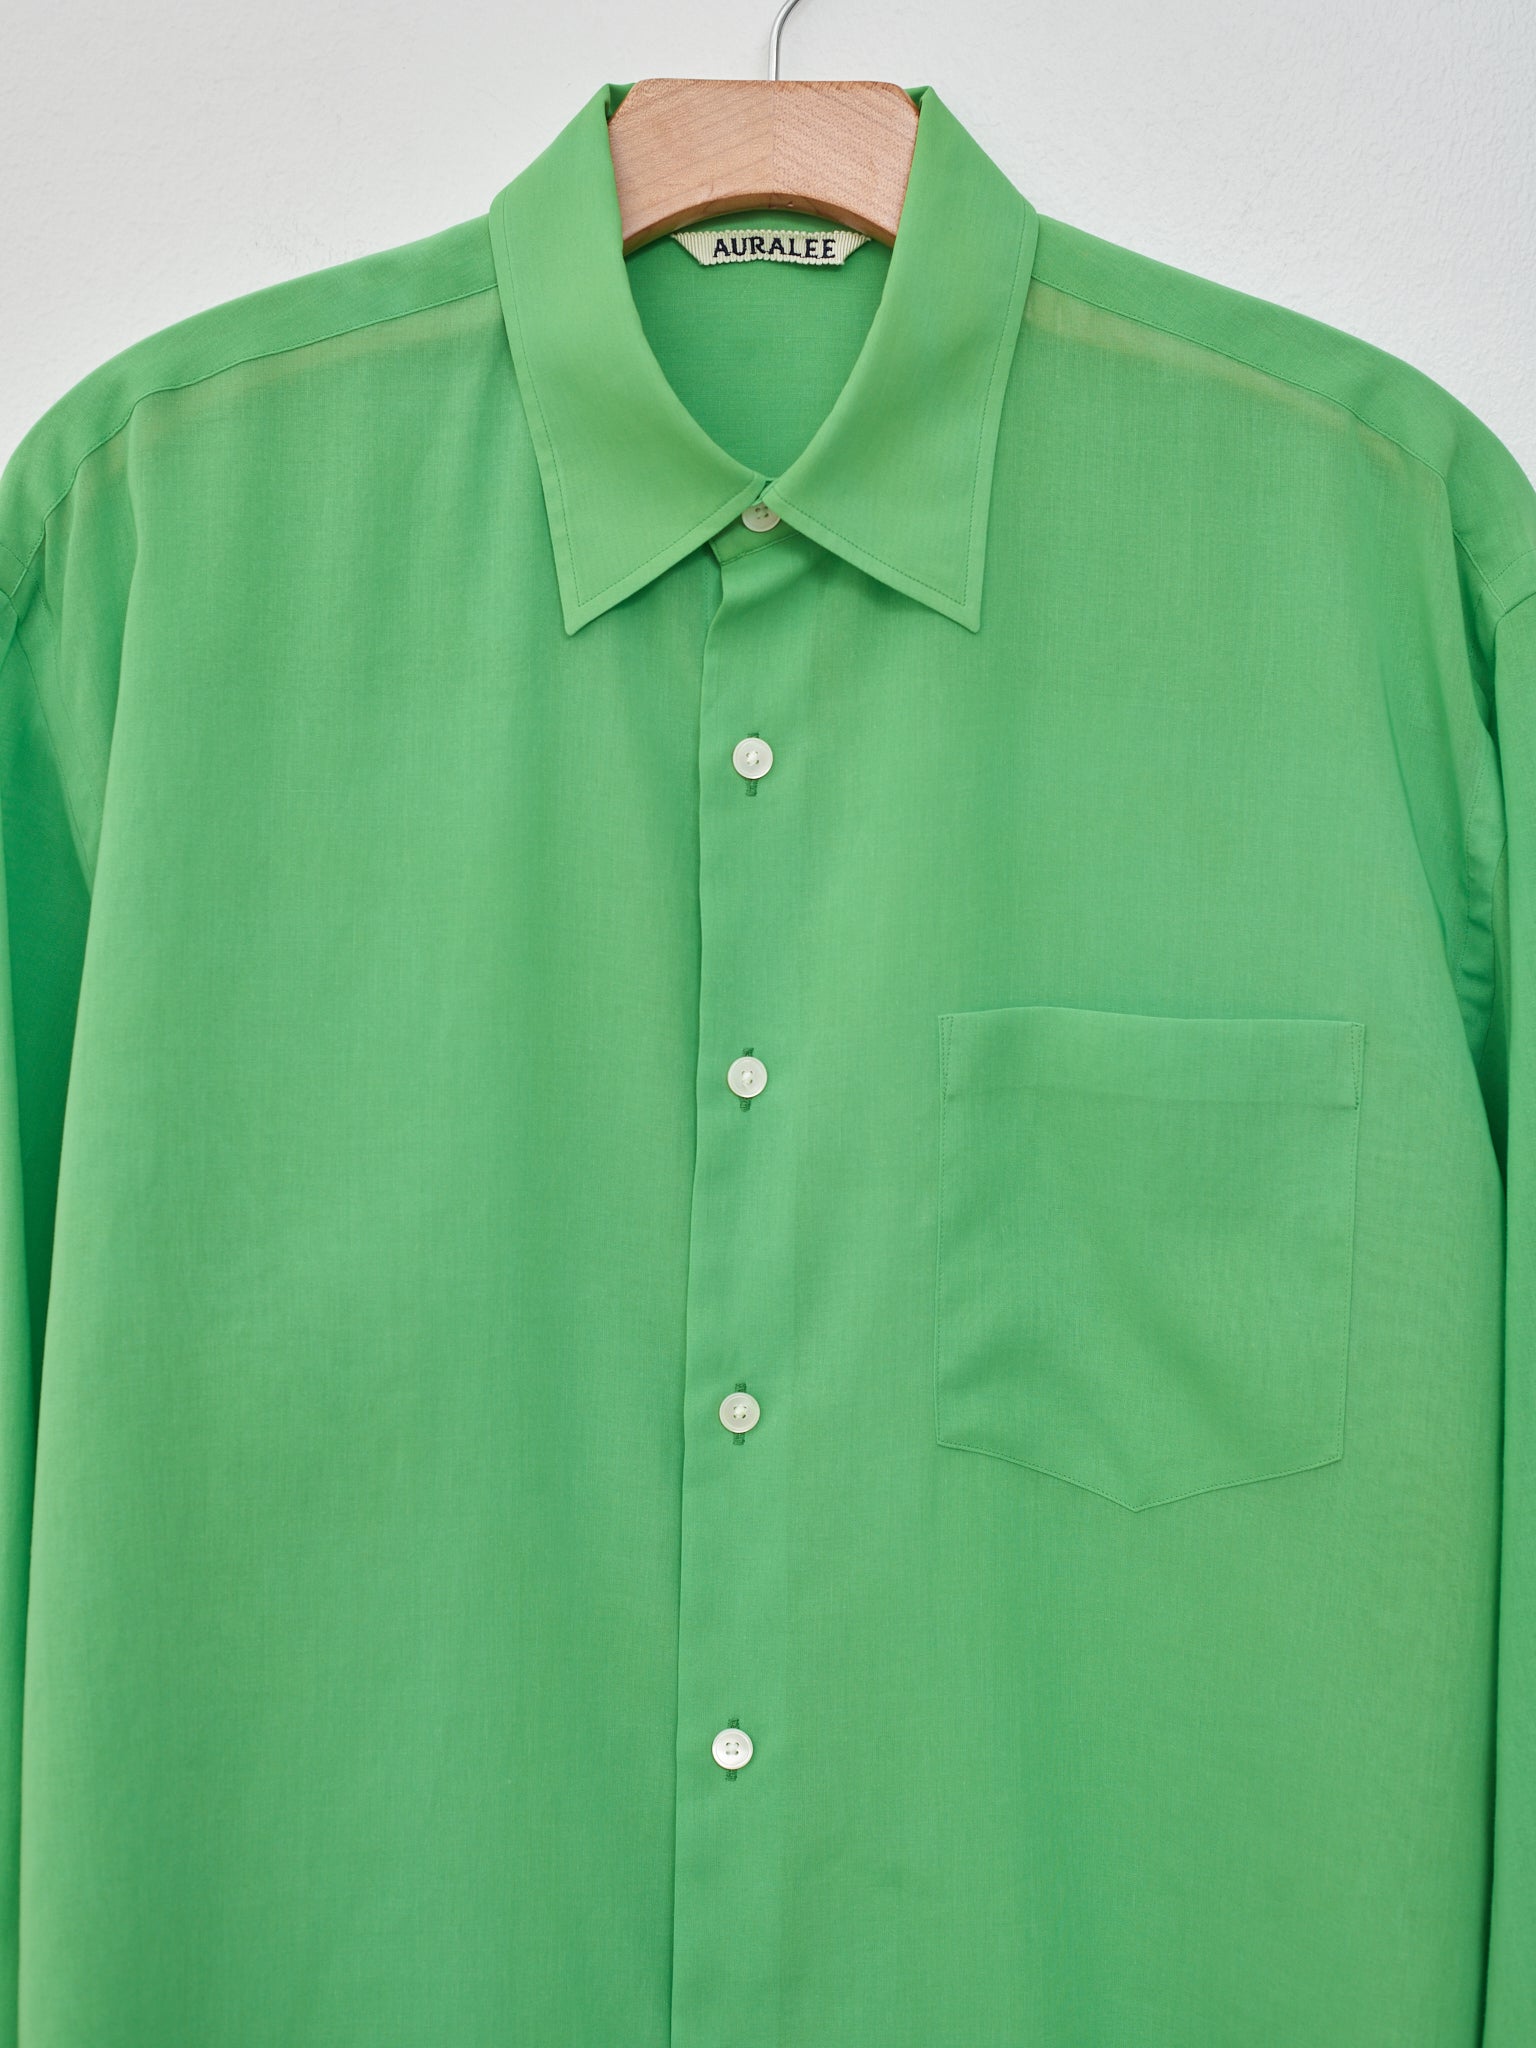 Namu Shop - Auralee Hard Twist Finx Organdy Shirt - Green